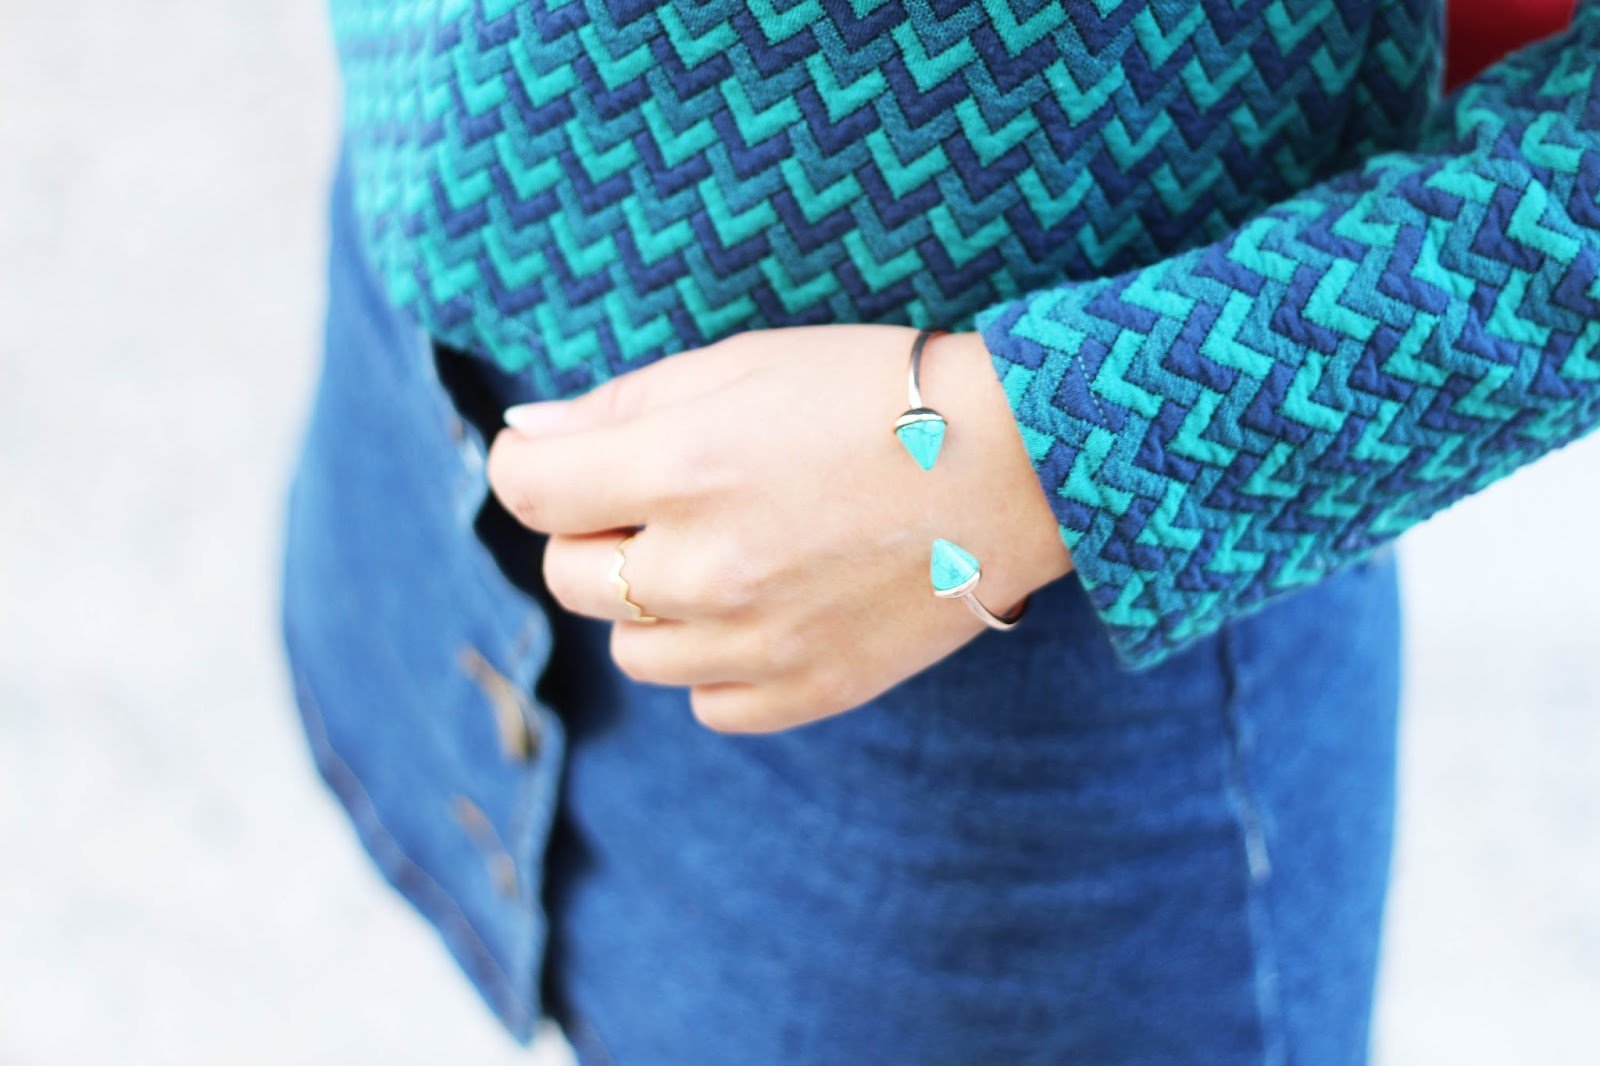 Bracelet pierre turquoise